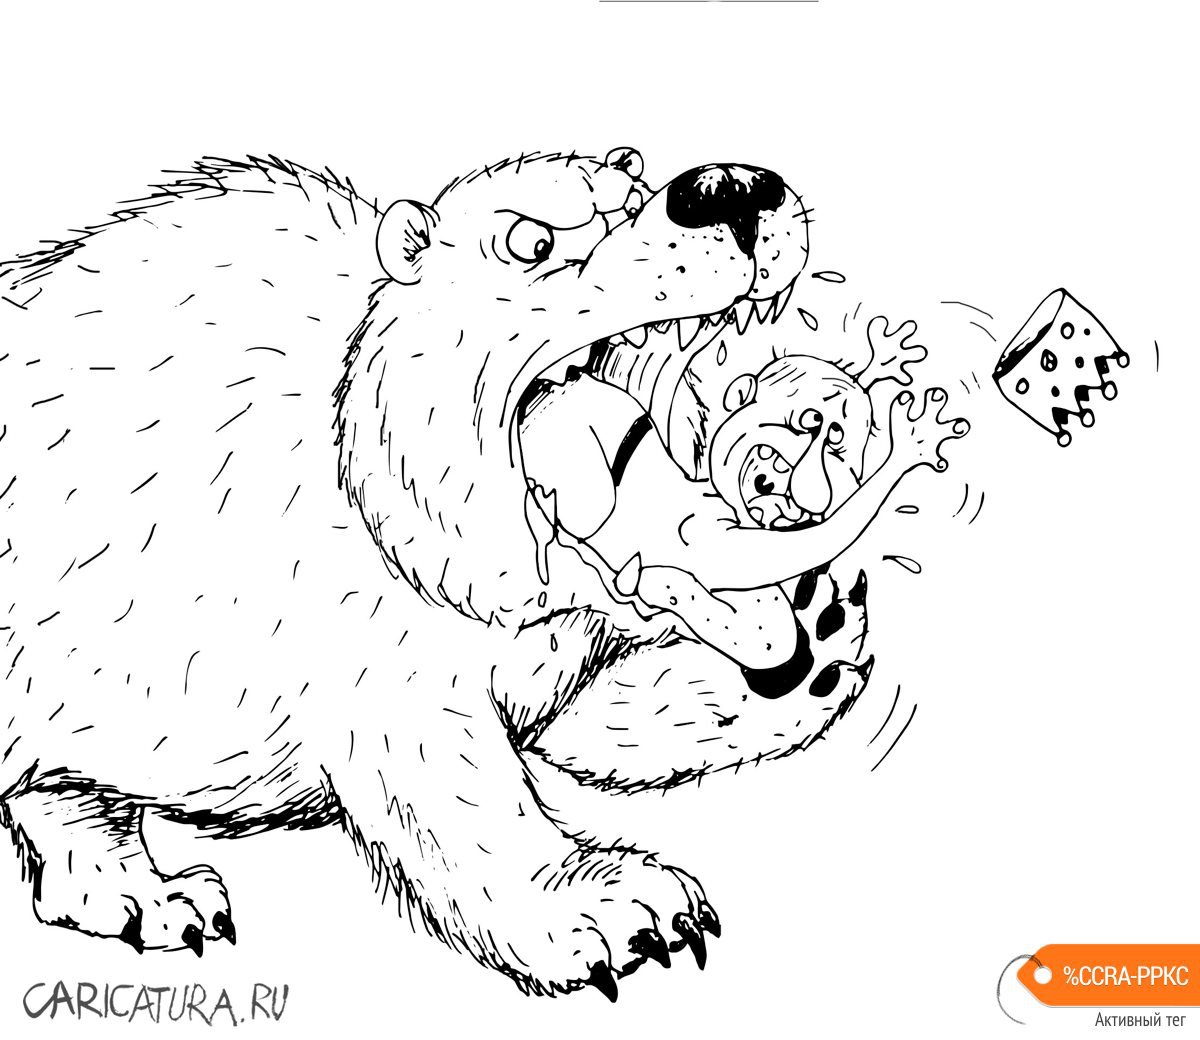 Карикатура "Путин докатался на медведе", Matilda Golubeva